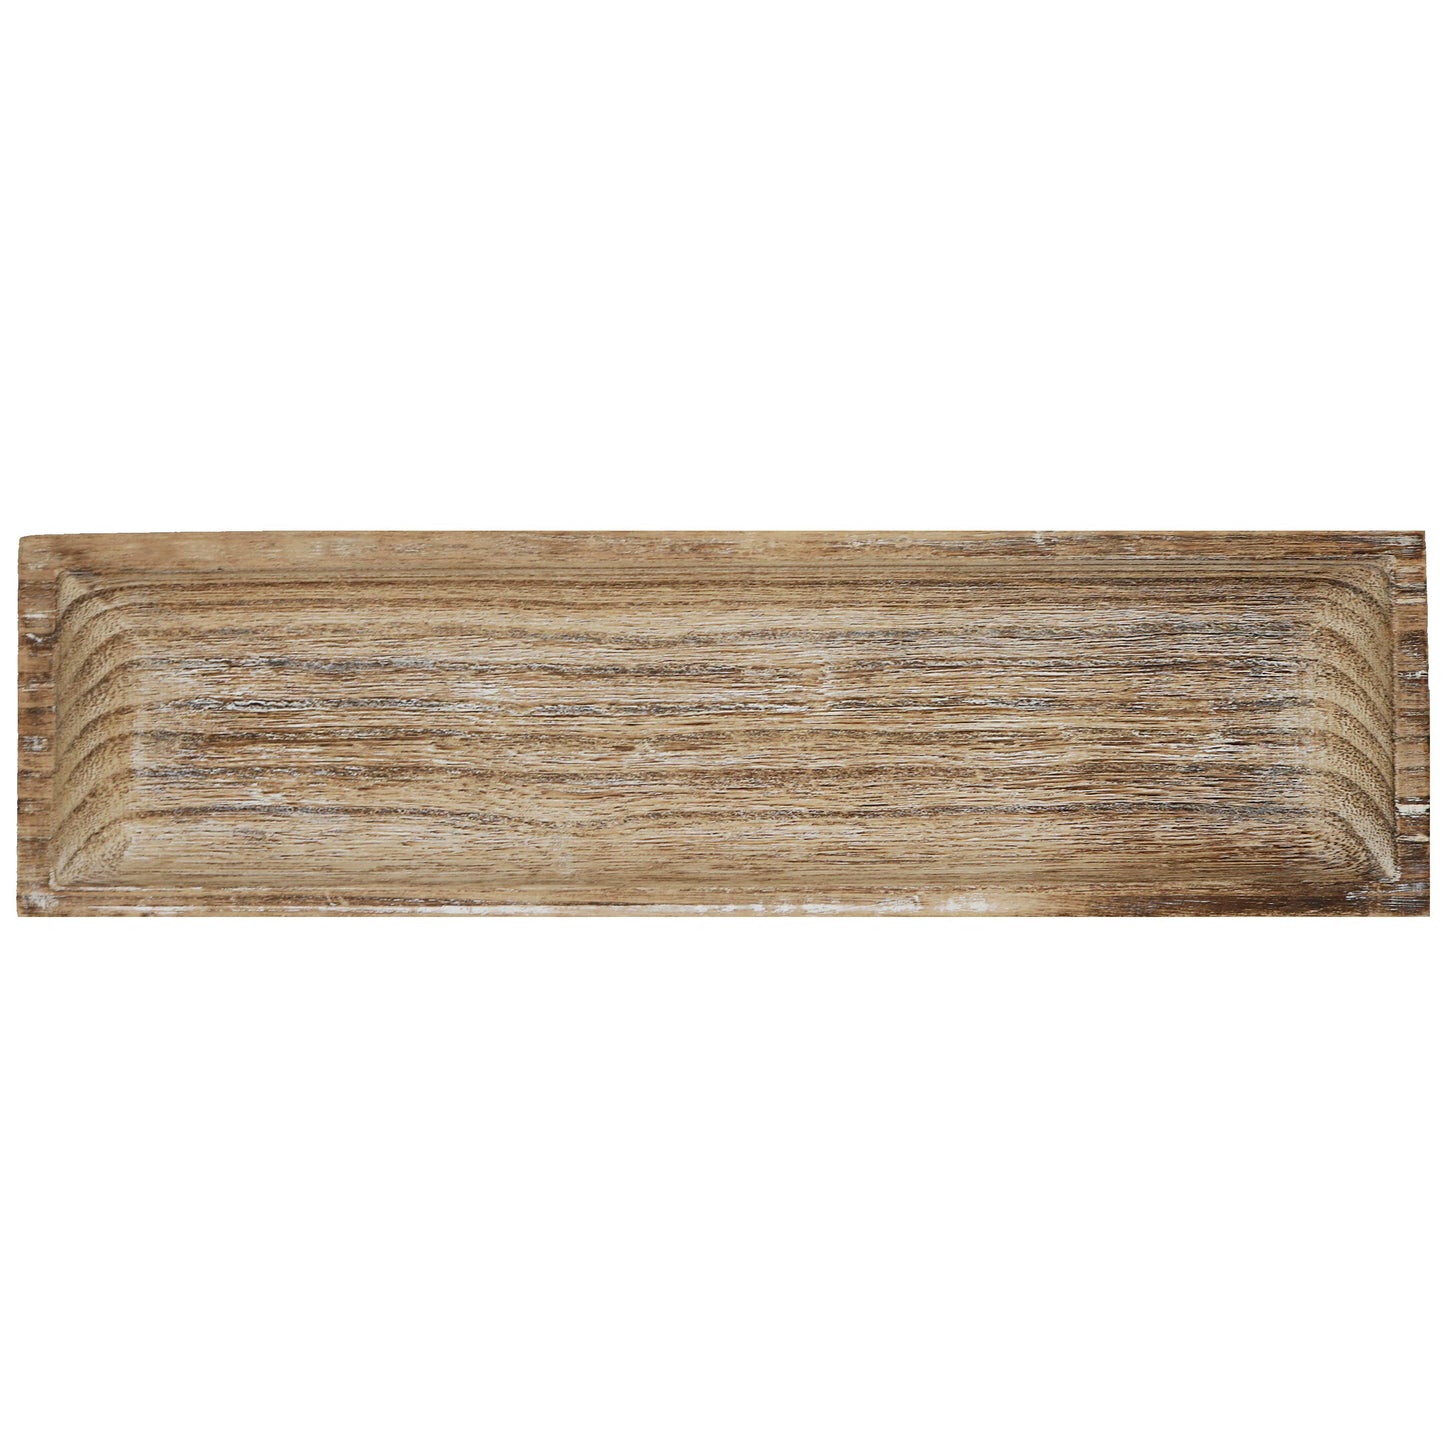 Rectangular Rustic Wood Decorative Tray